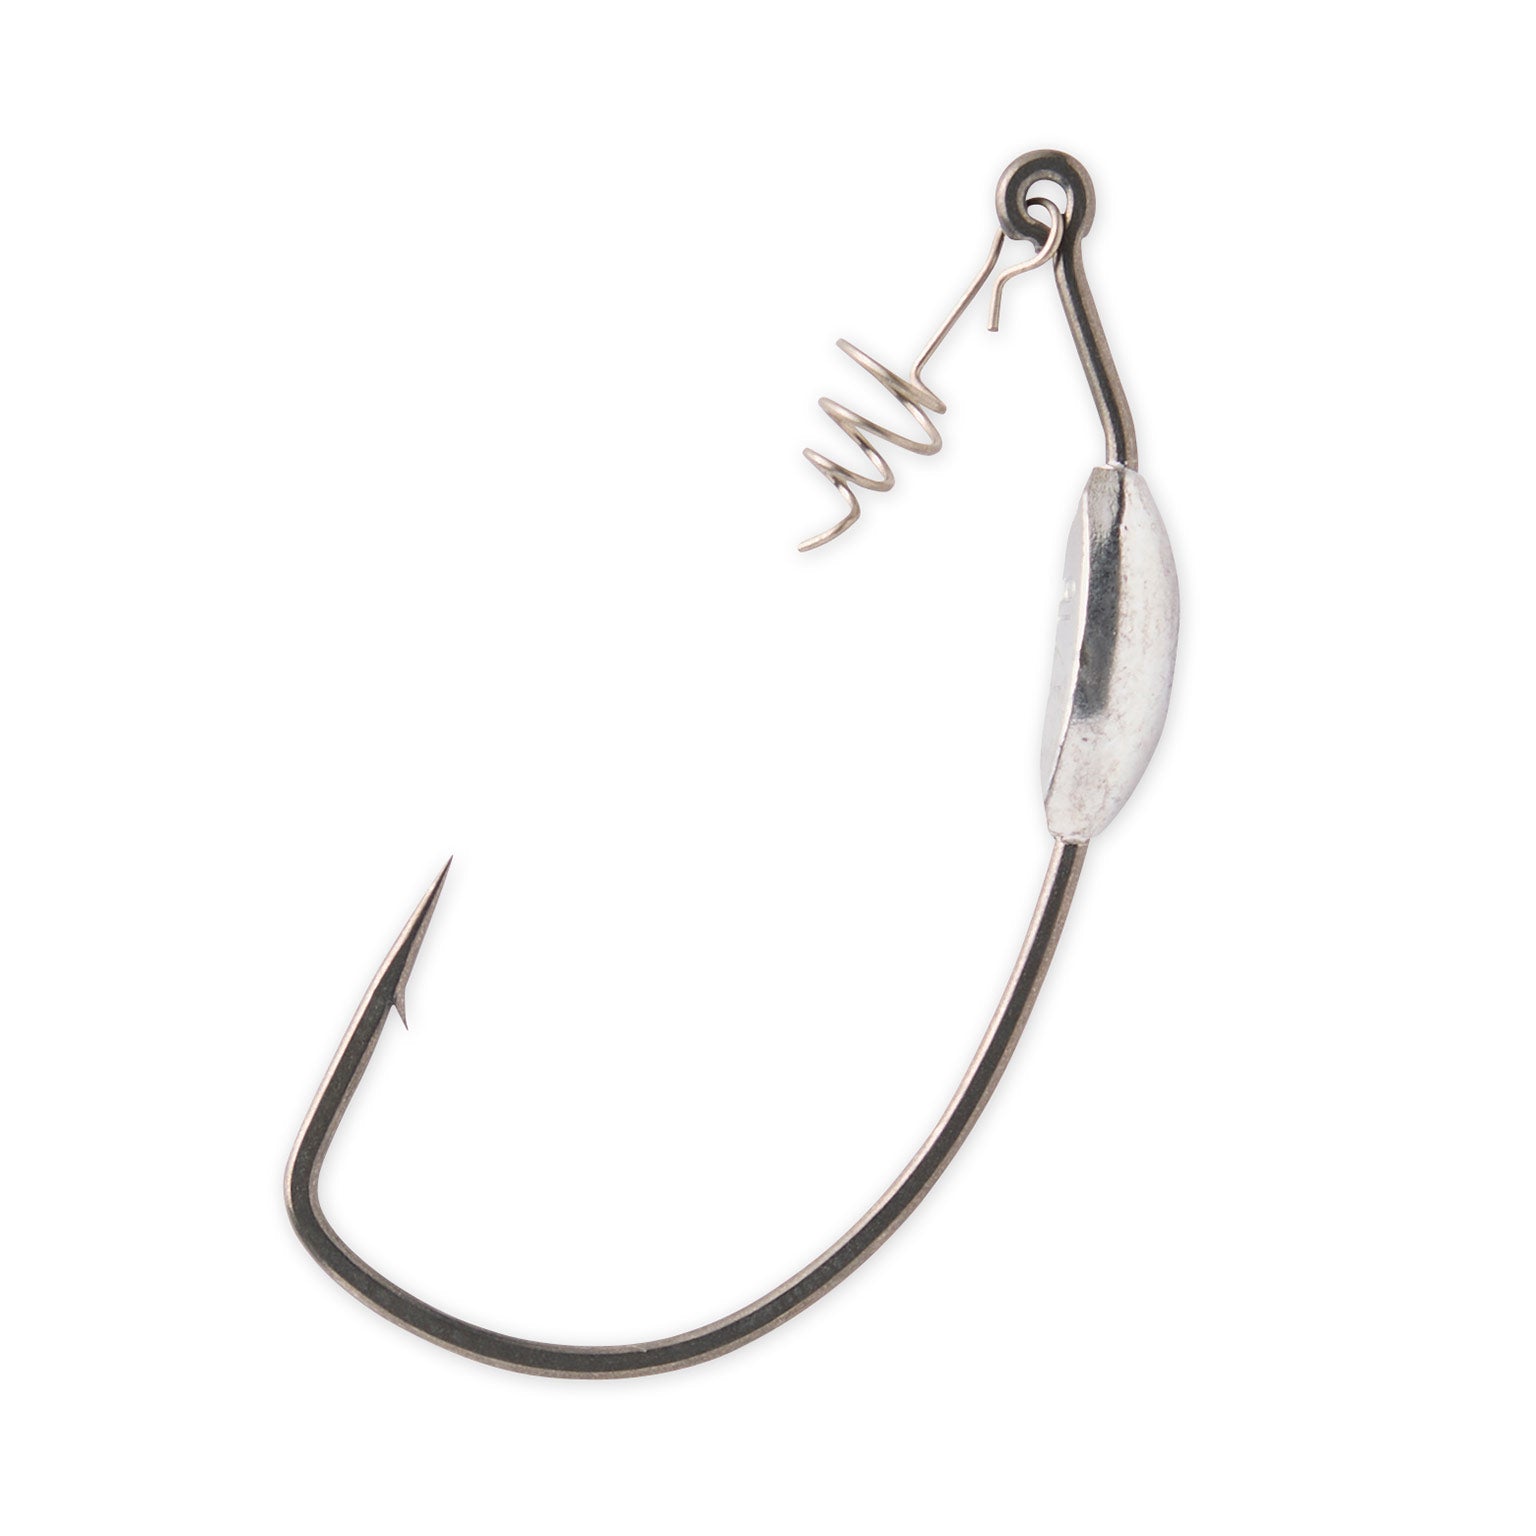 Gamakatsu Superline Swim Bait 1/8 oz Head Fishing Hook (3 Pack), Size 4/0,  Pearl White, Hooks -  Canada